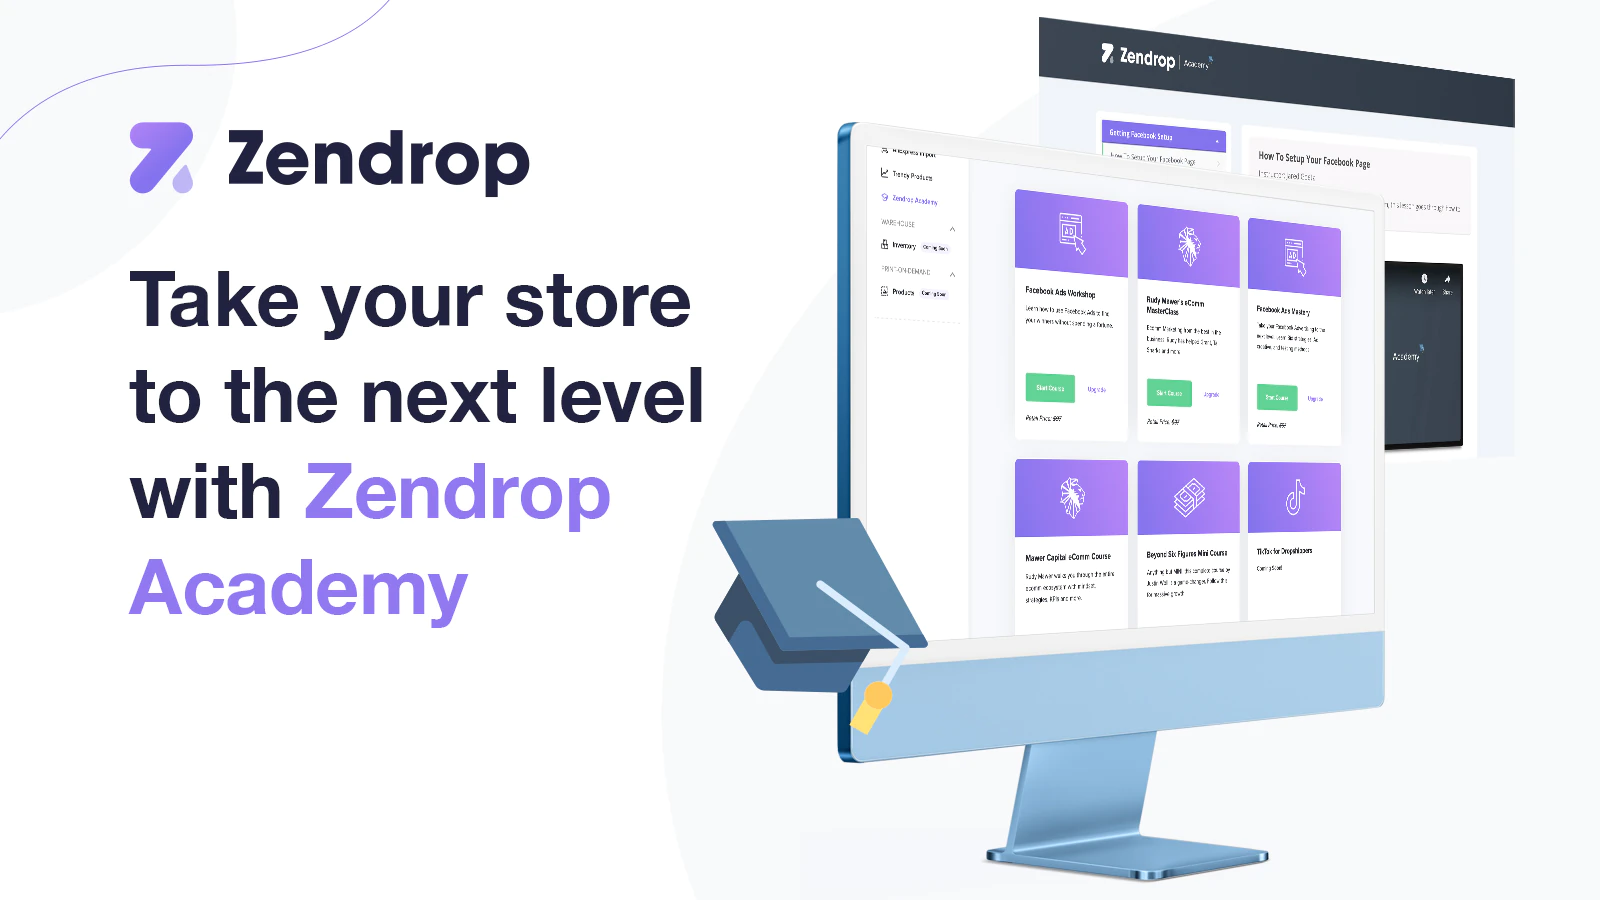 zendrop-dropshipping-pod-app-academy